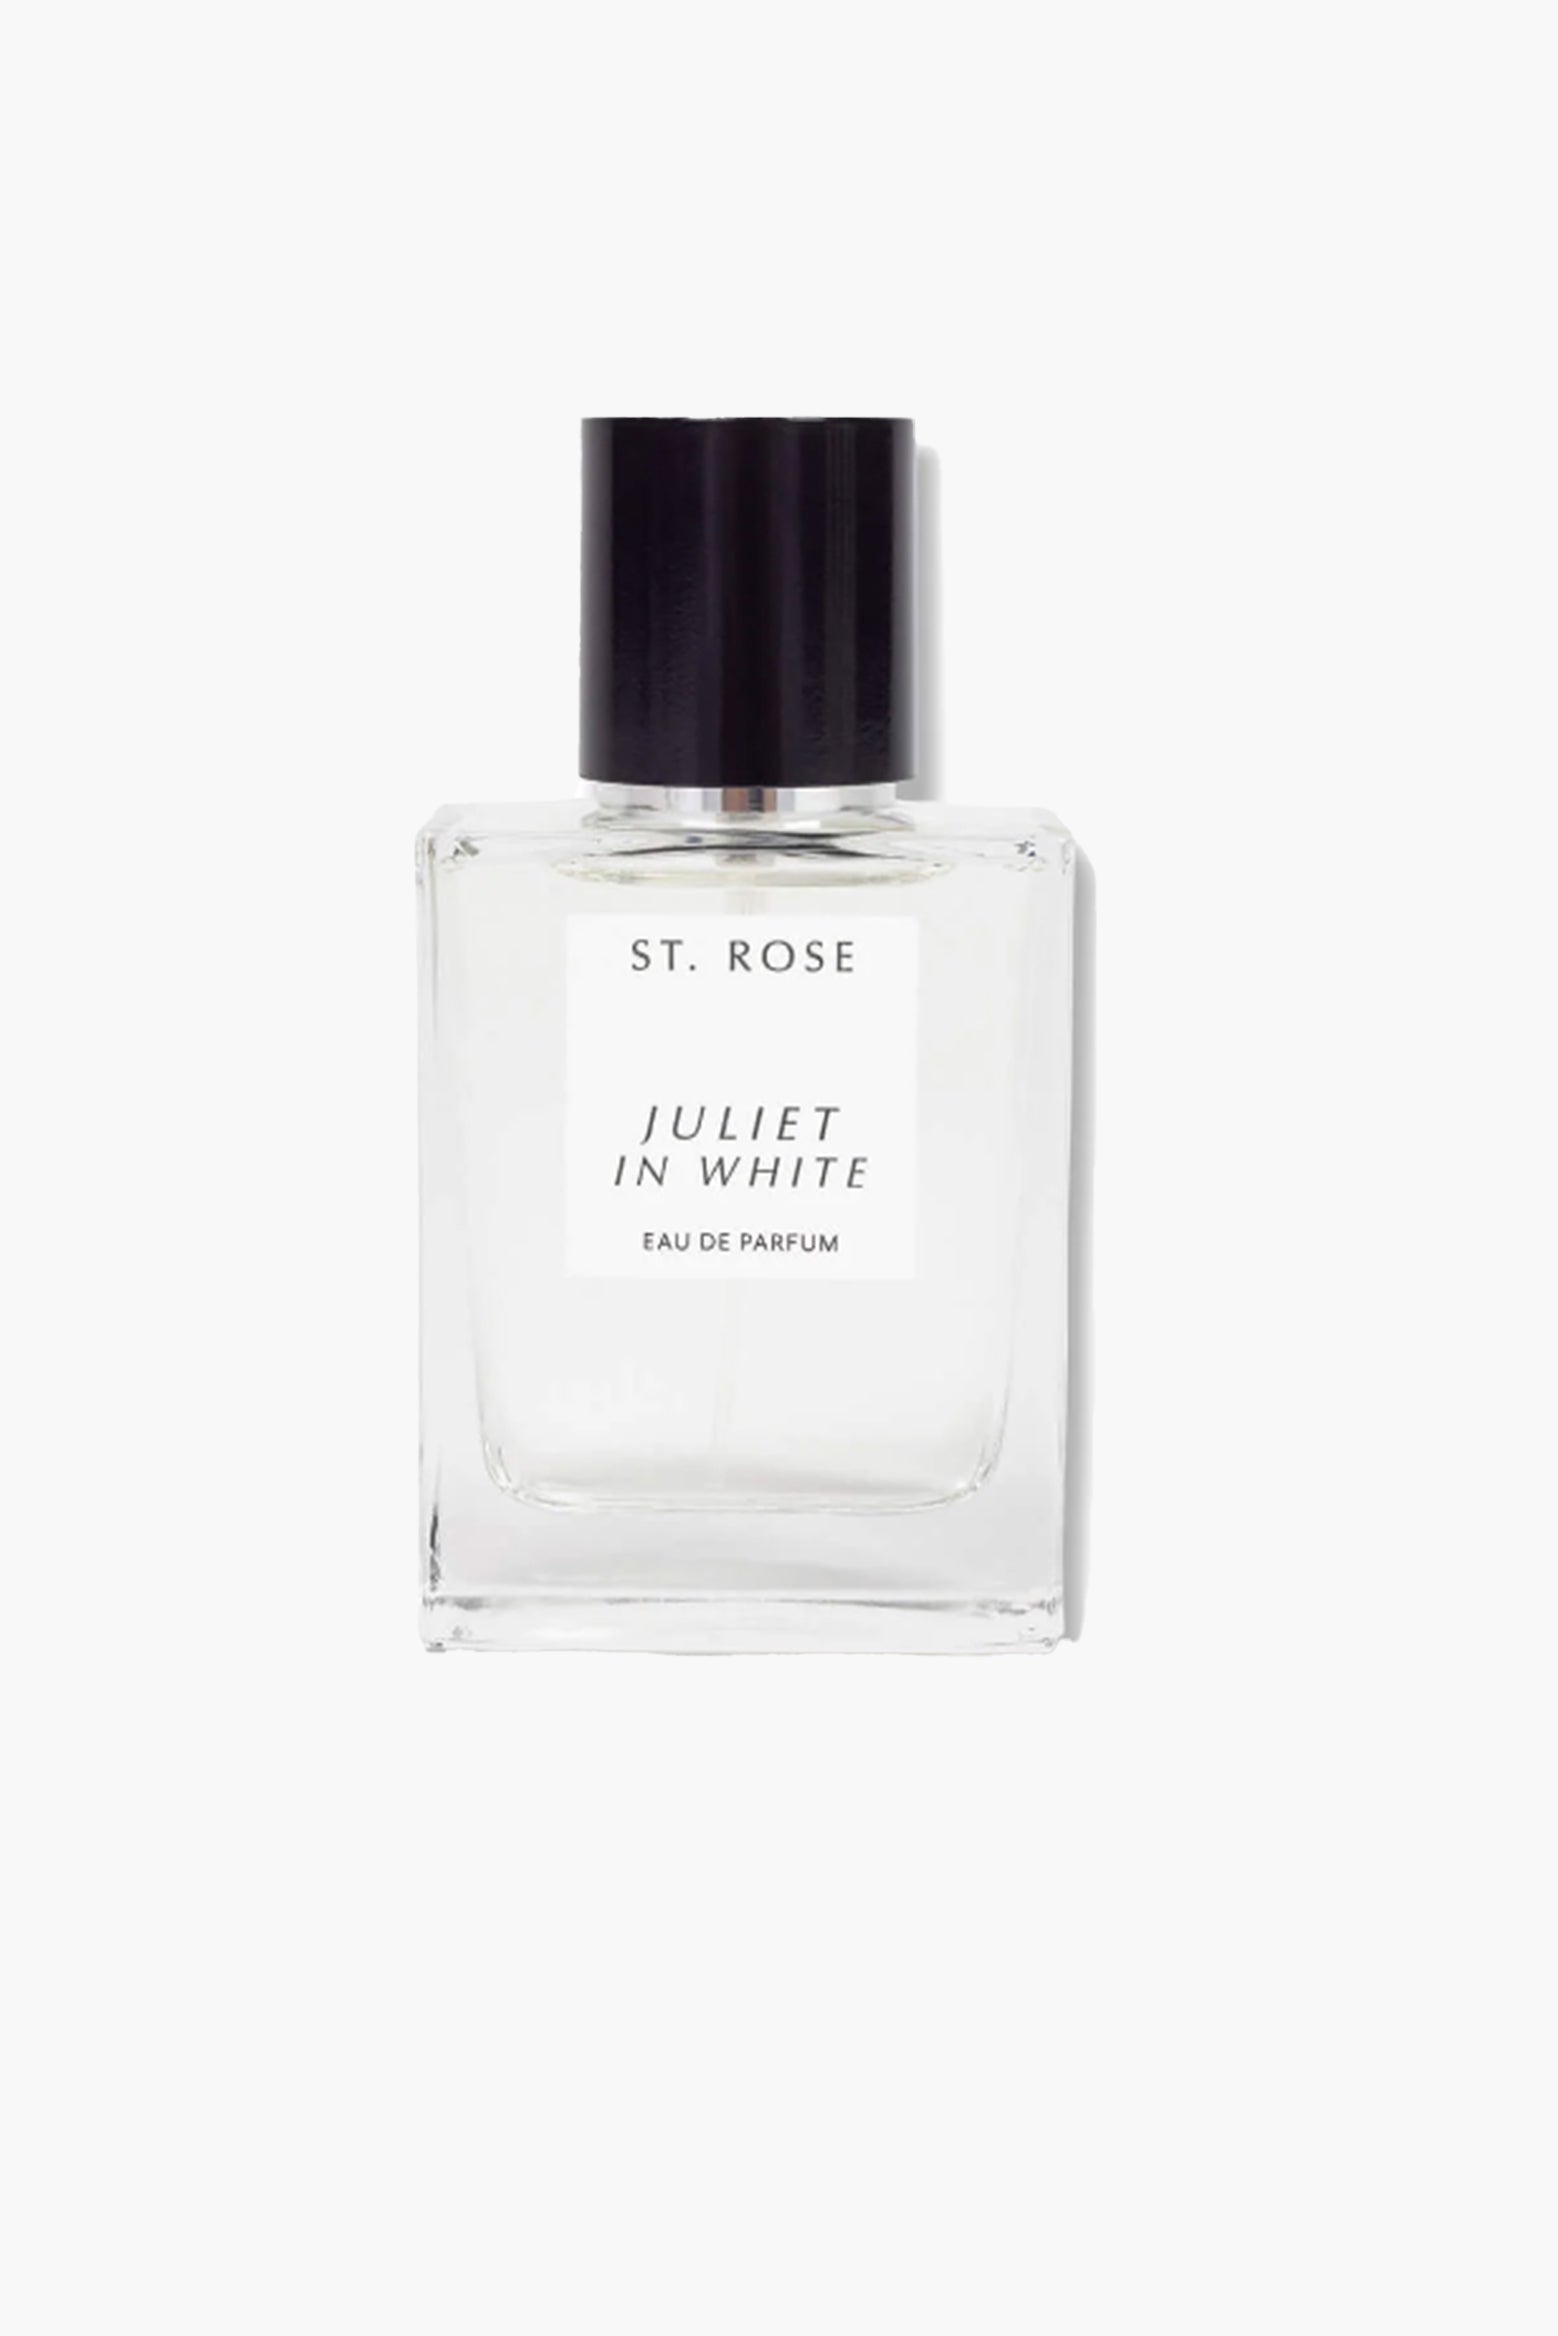 St. Rose Juliet In White Eau De Parfum available at The New Trend